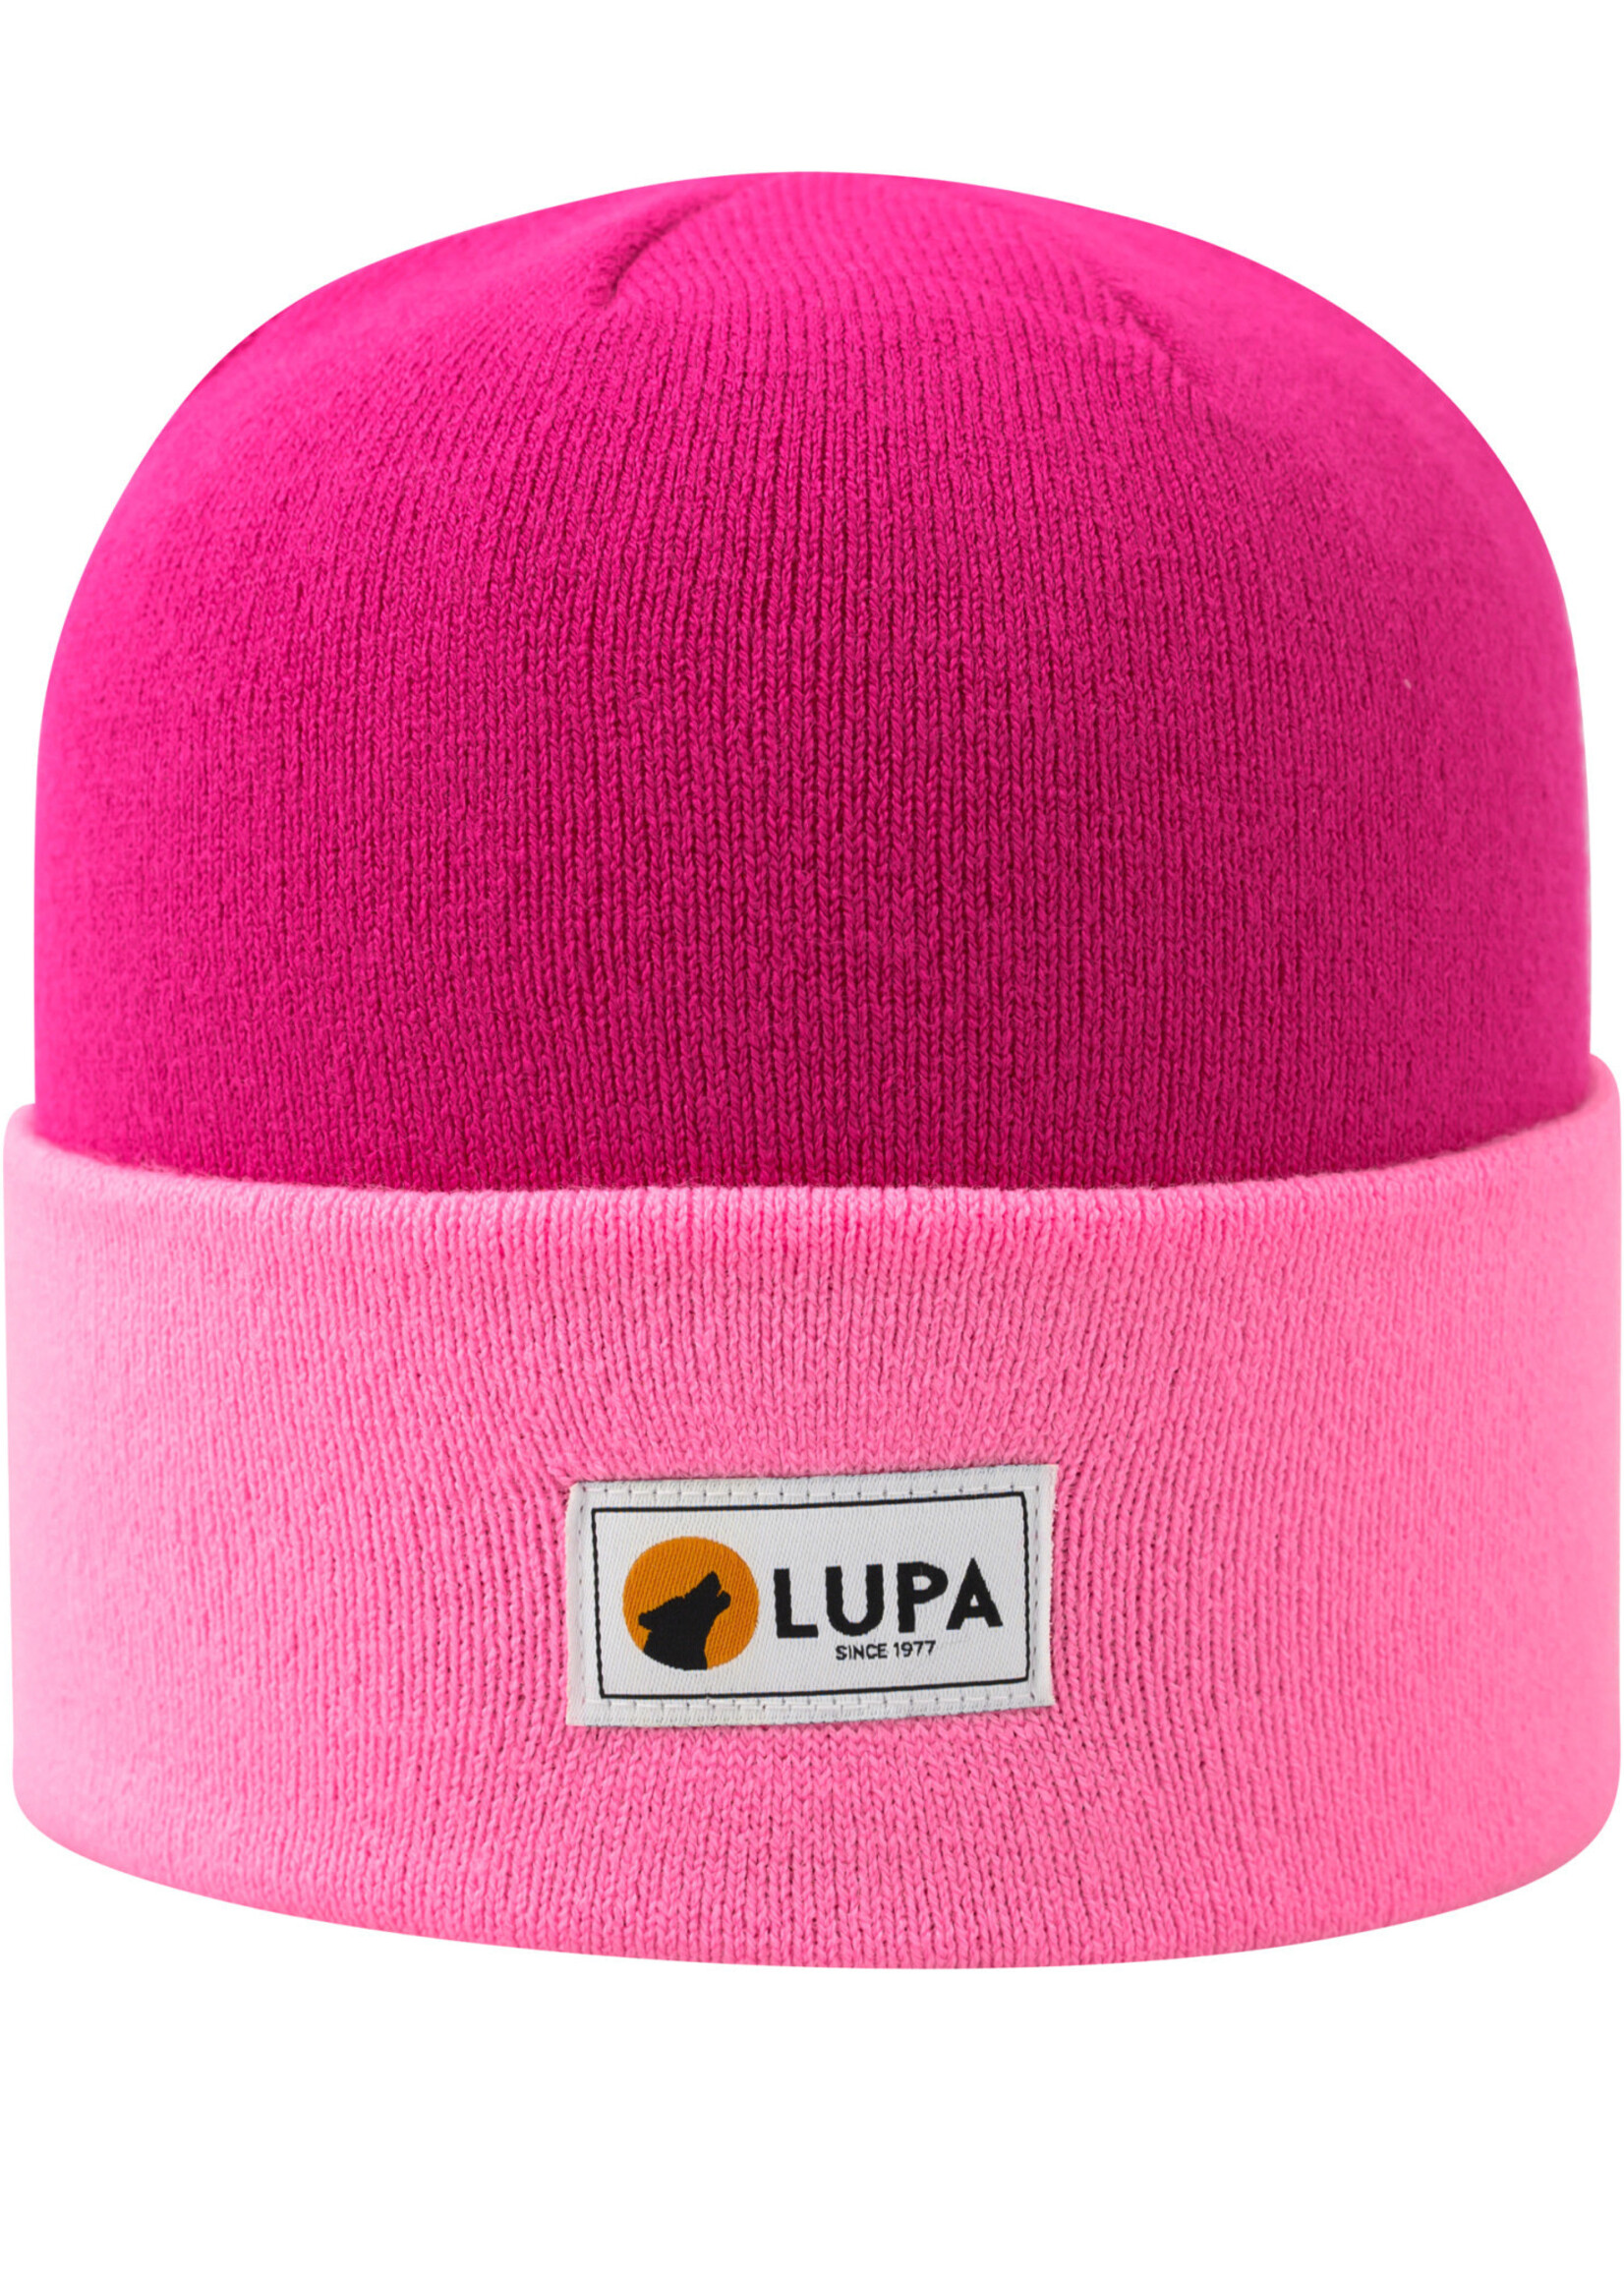 Lupa Tuque Bicolore Enfant Fuschia/Pink | Canadian-made Kids Acrylic Beanie Fuschia/Pink